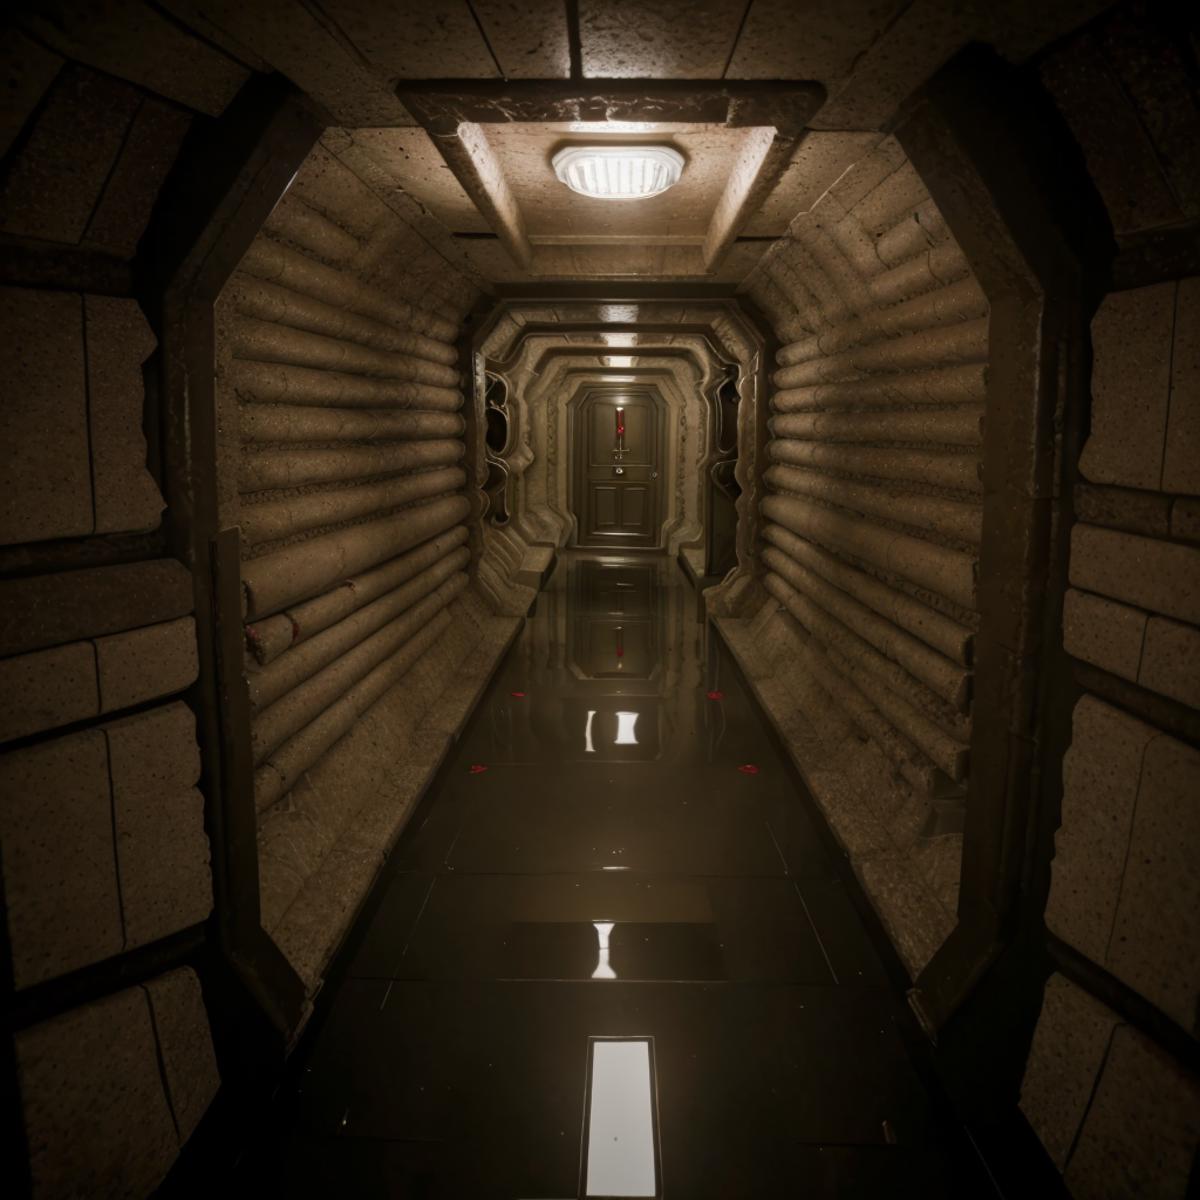 Alien Corridors image by Adimensional